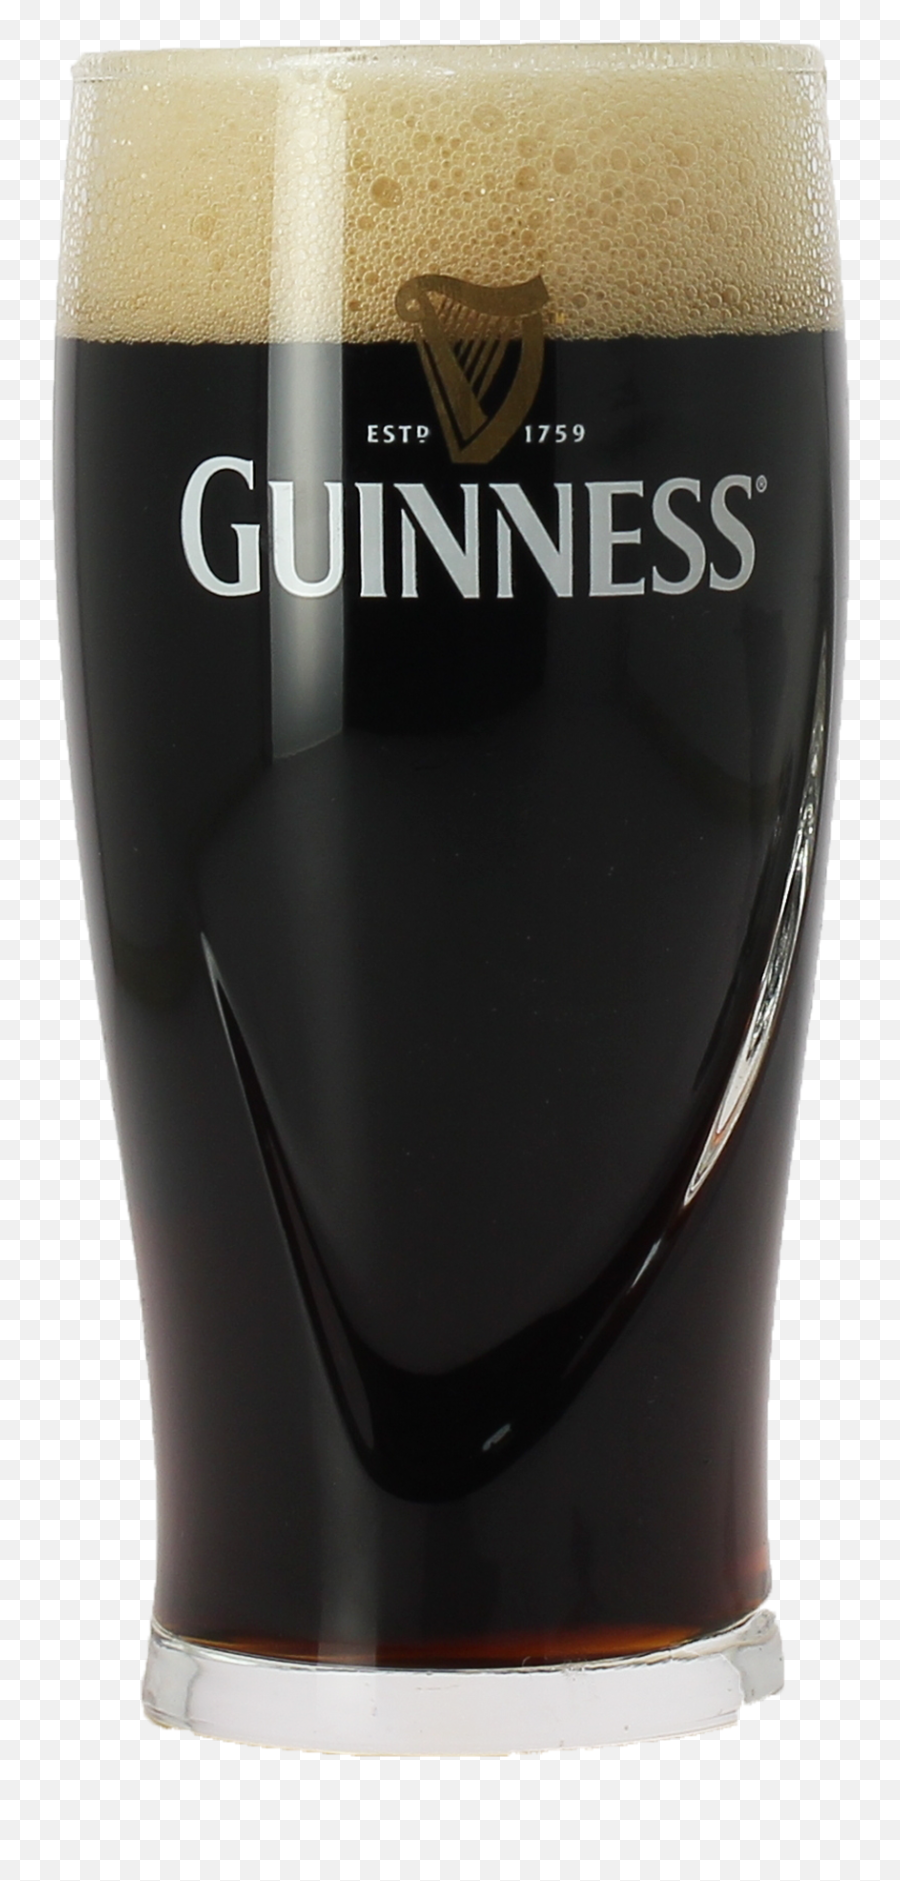 Guinness St Jamesu0027s Gate Buy Cheap Beer Online - Guinness Png,Guinness Png